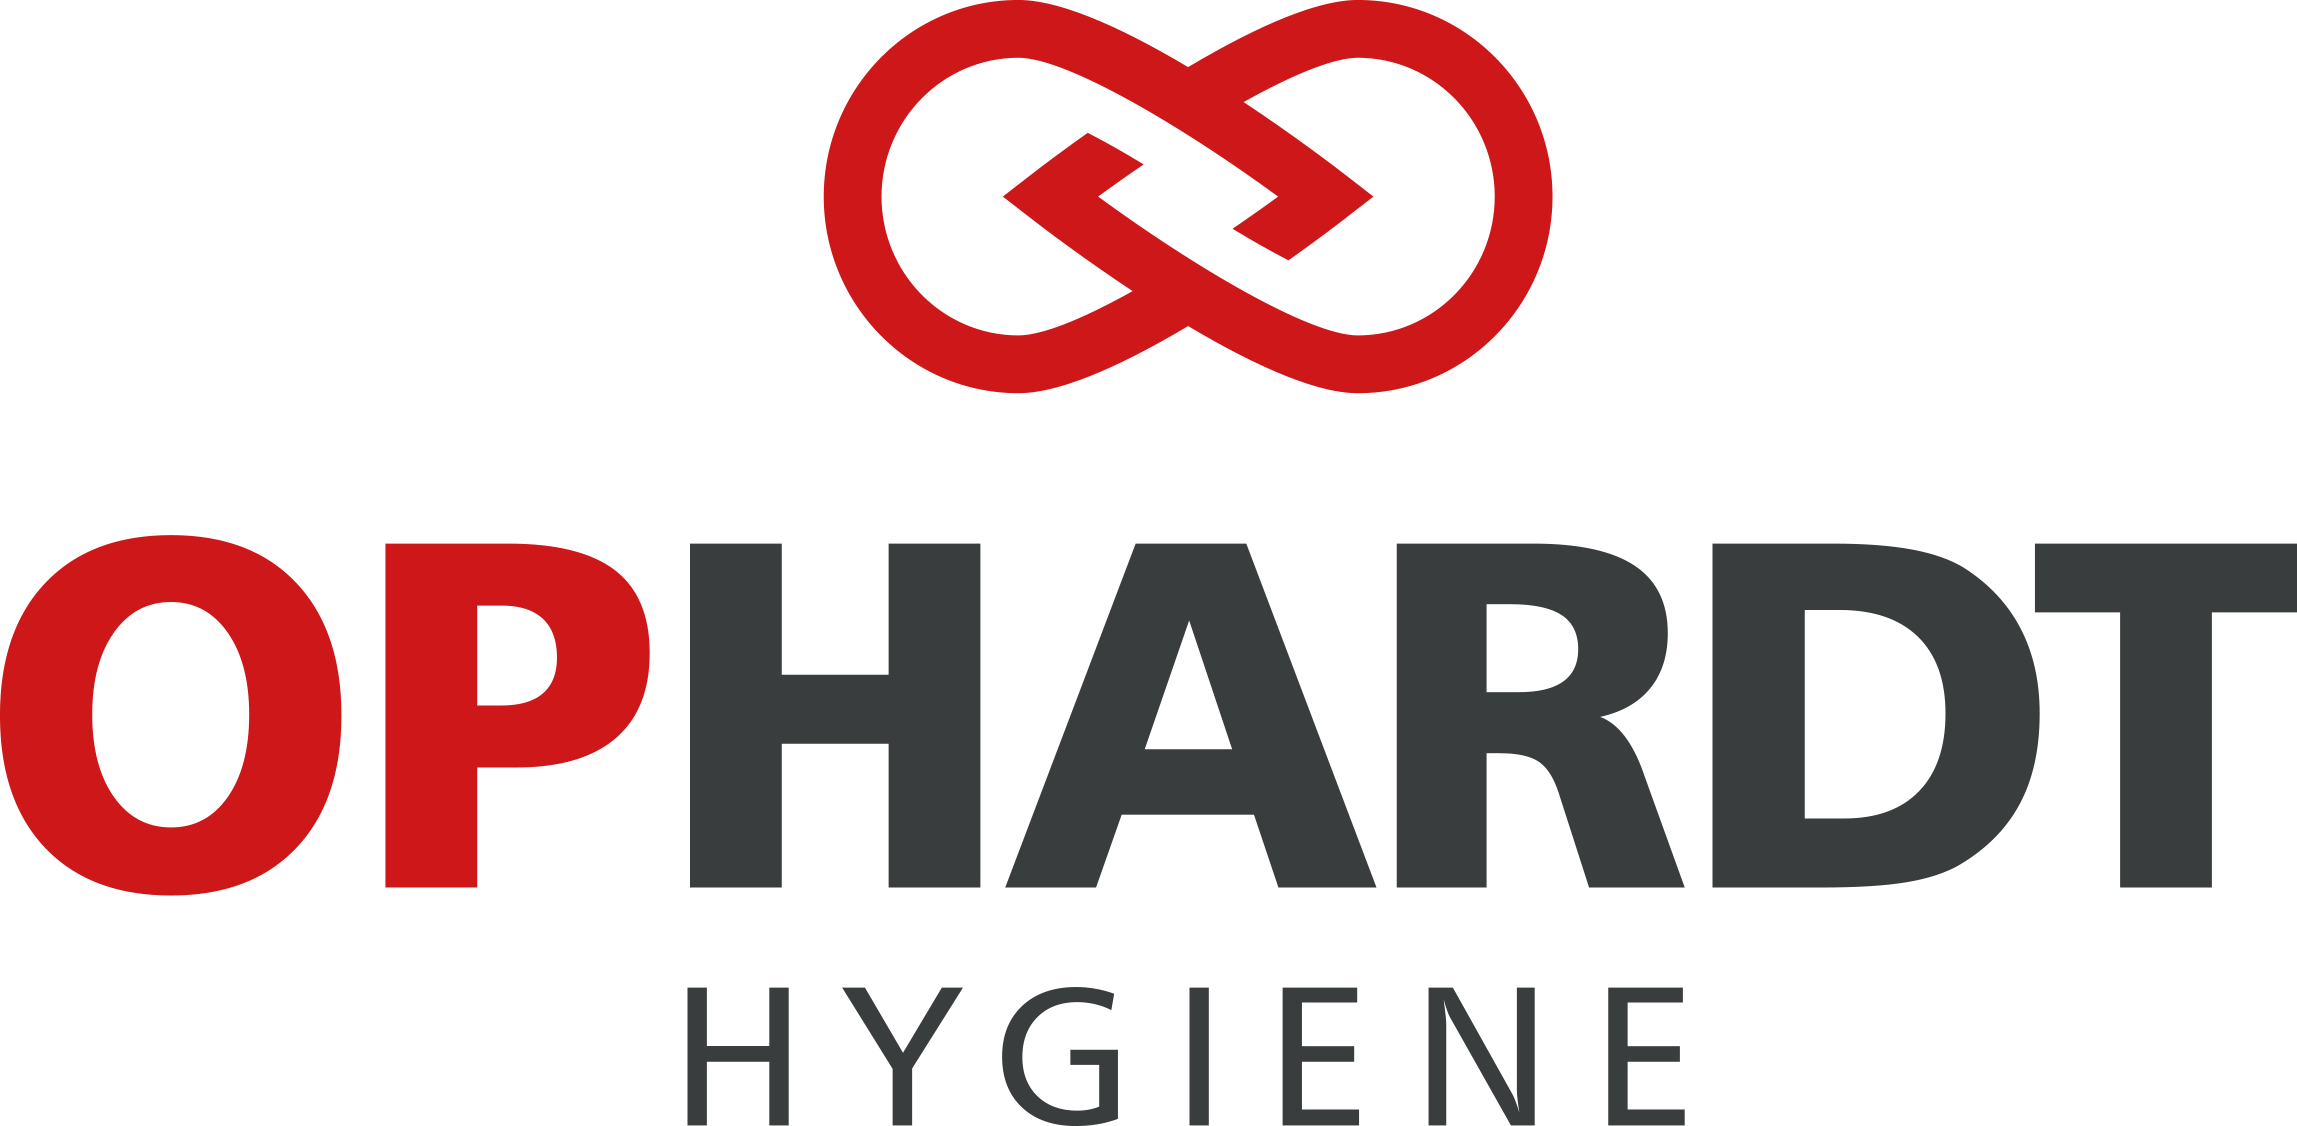 OPHARDT Hygiene logo